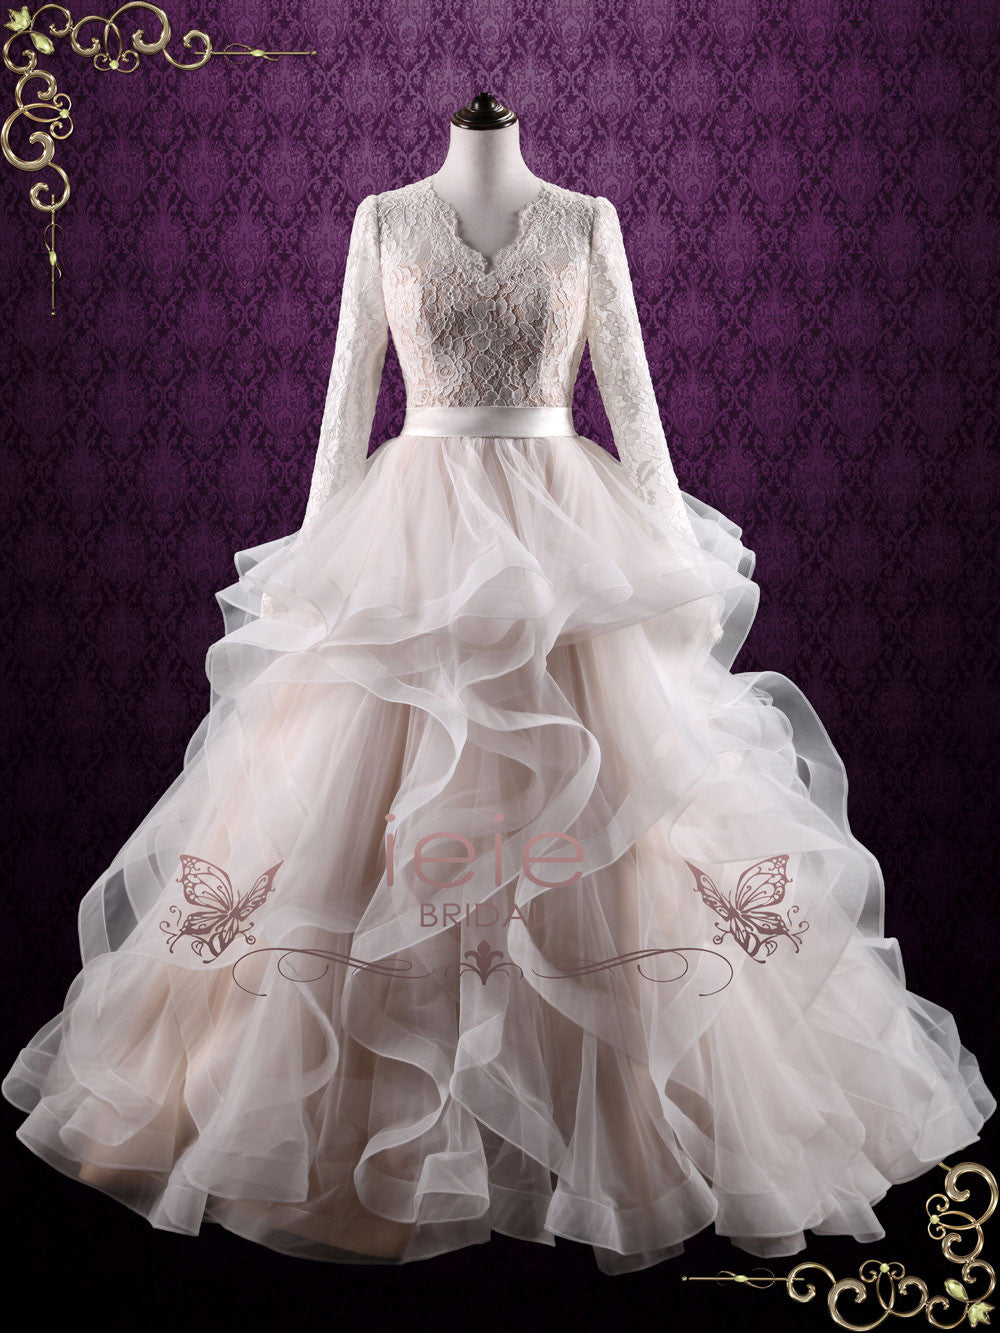 Modest Long Sleeves Wedding Dress with Ruffle Ball Gown Skirt  Cristi  ieie Bridal